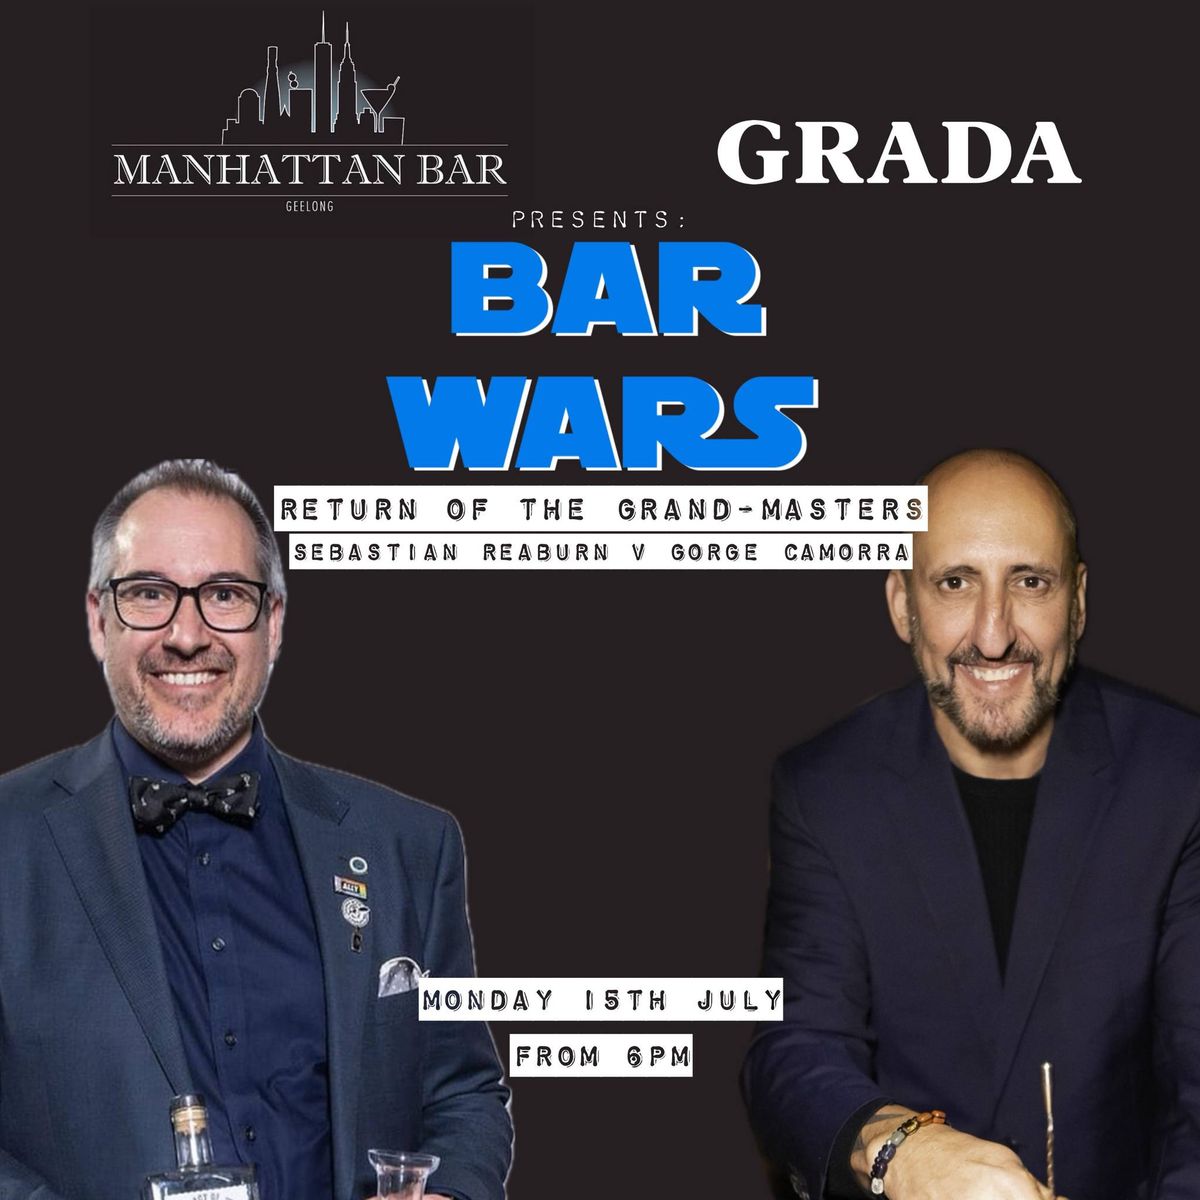 Manhattan Bar and Grada Coffee+Spirit Present: Bar Wars 3 Return of the Grand-Masters